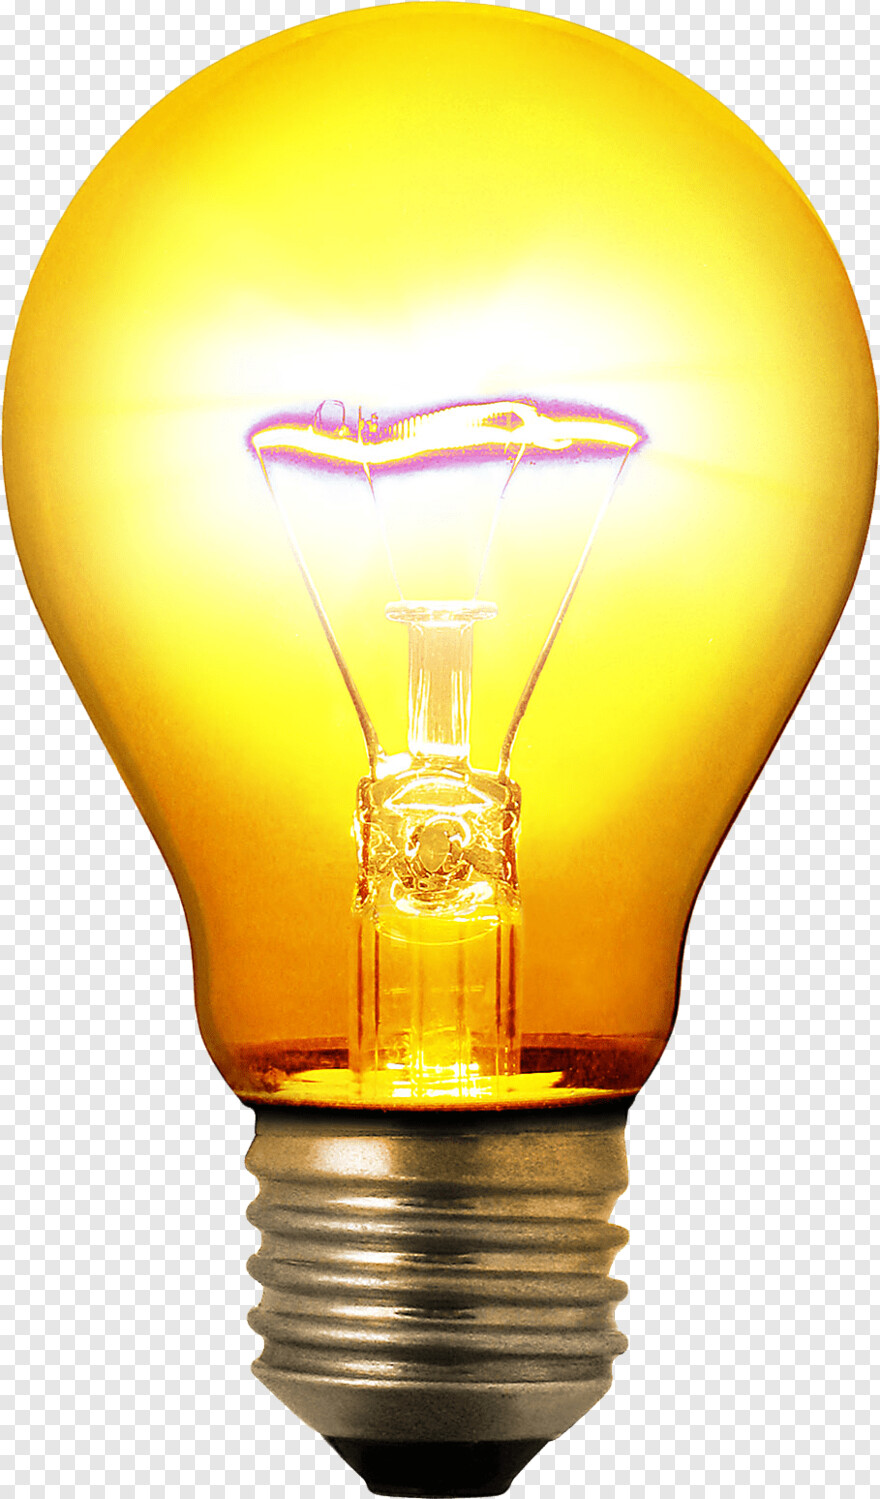 light-bulb-clip-art # 429467